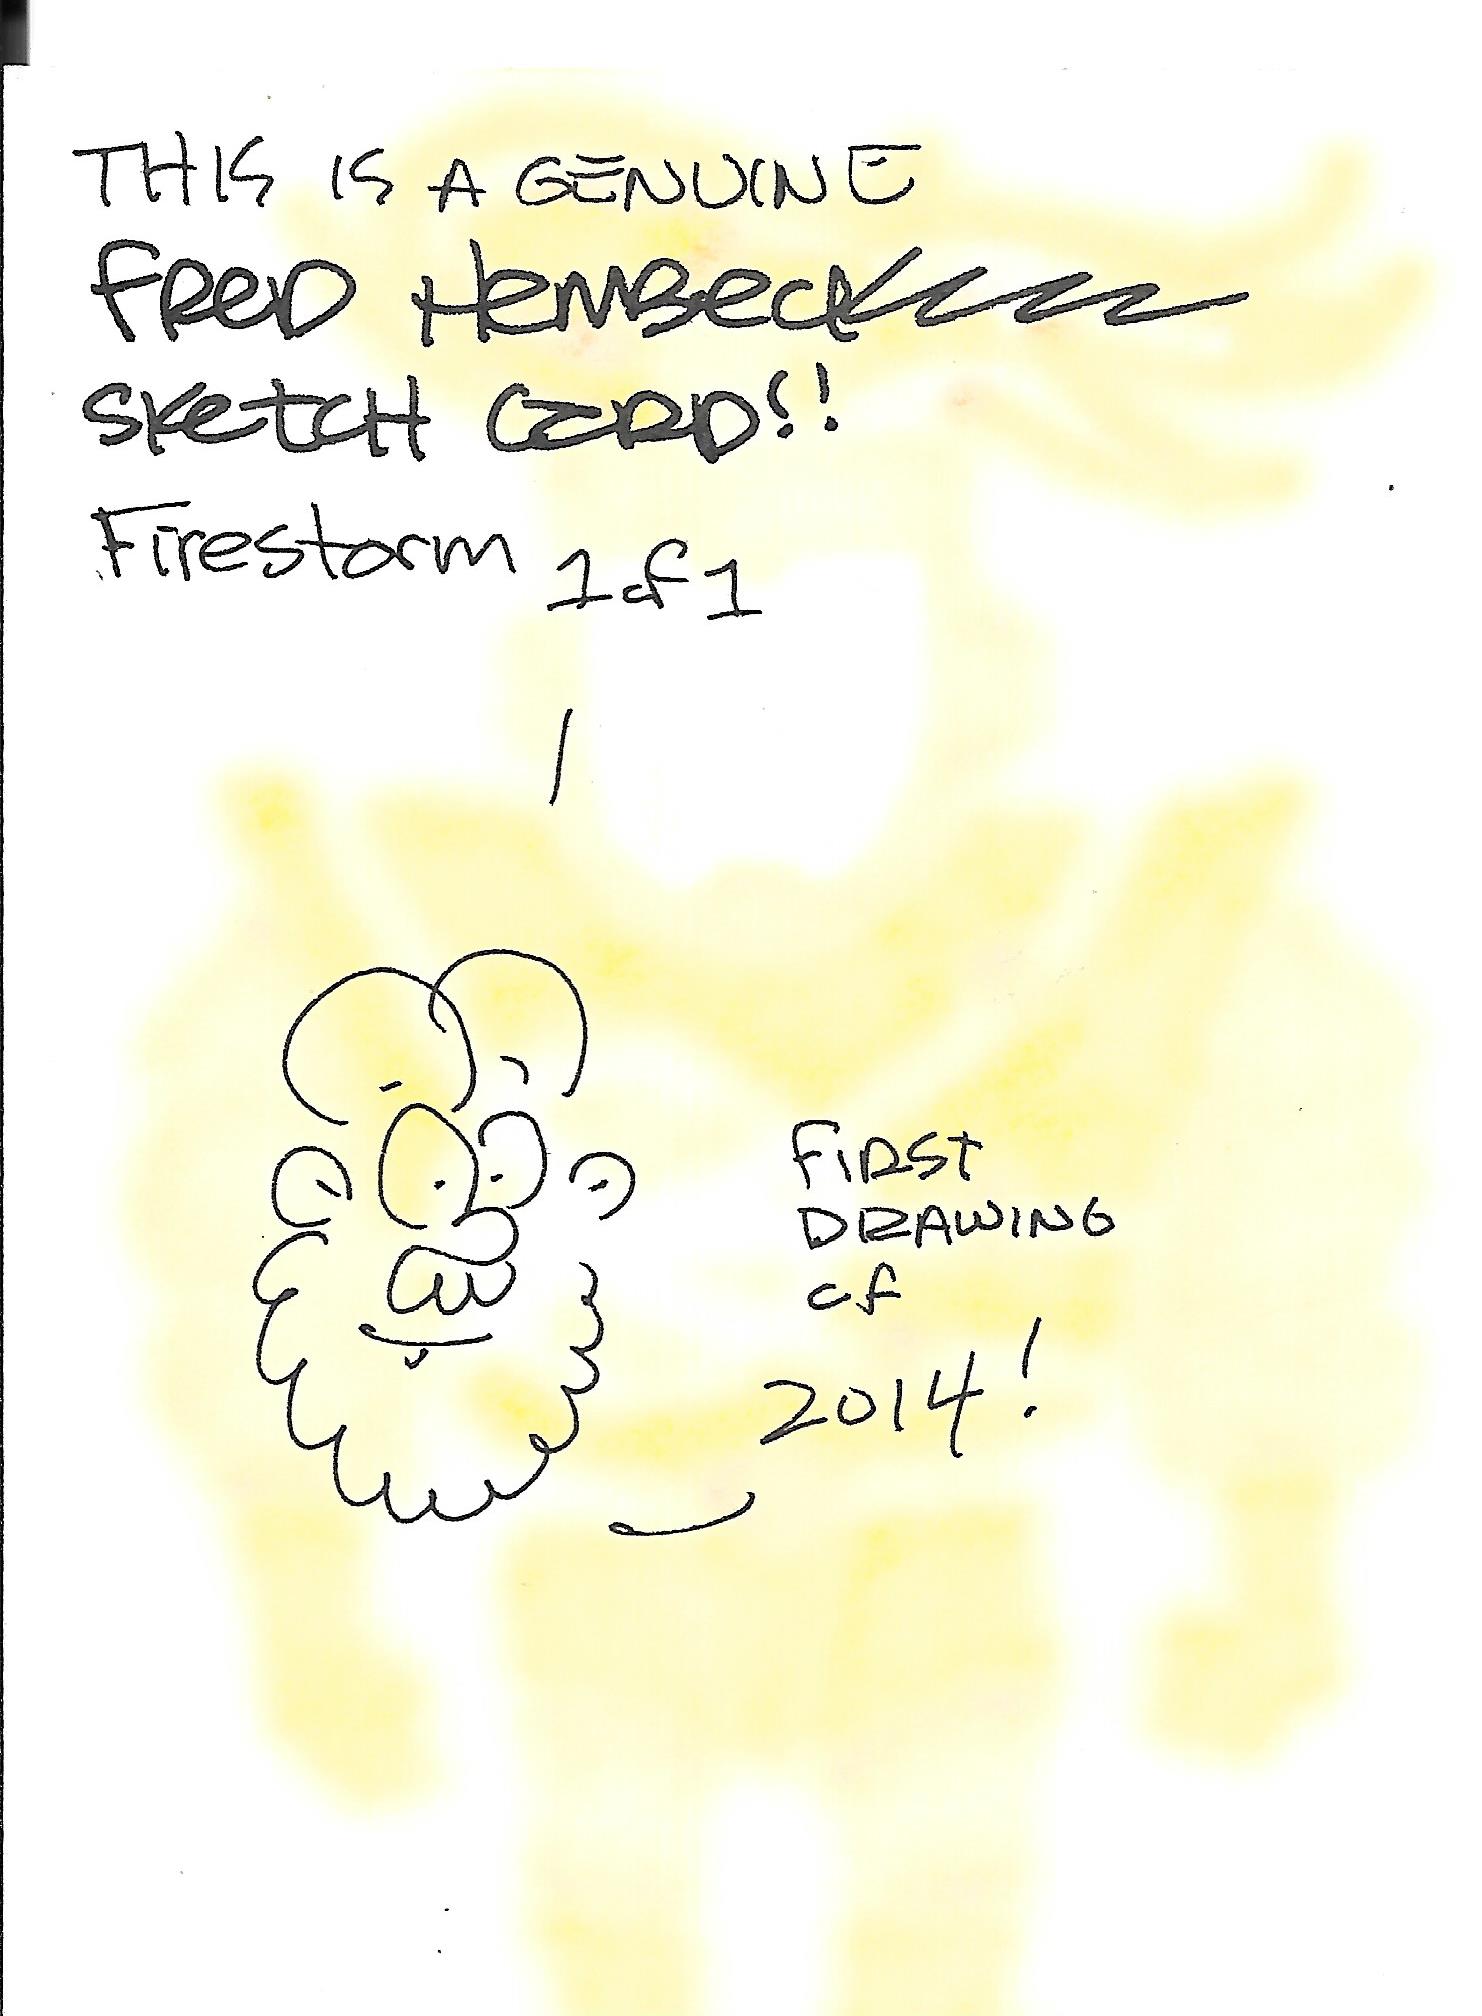 Fred Hembeck draws Firestorm